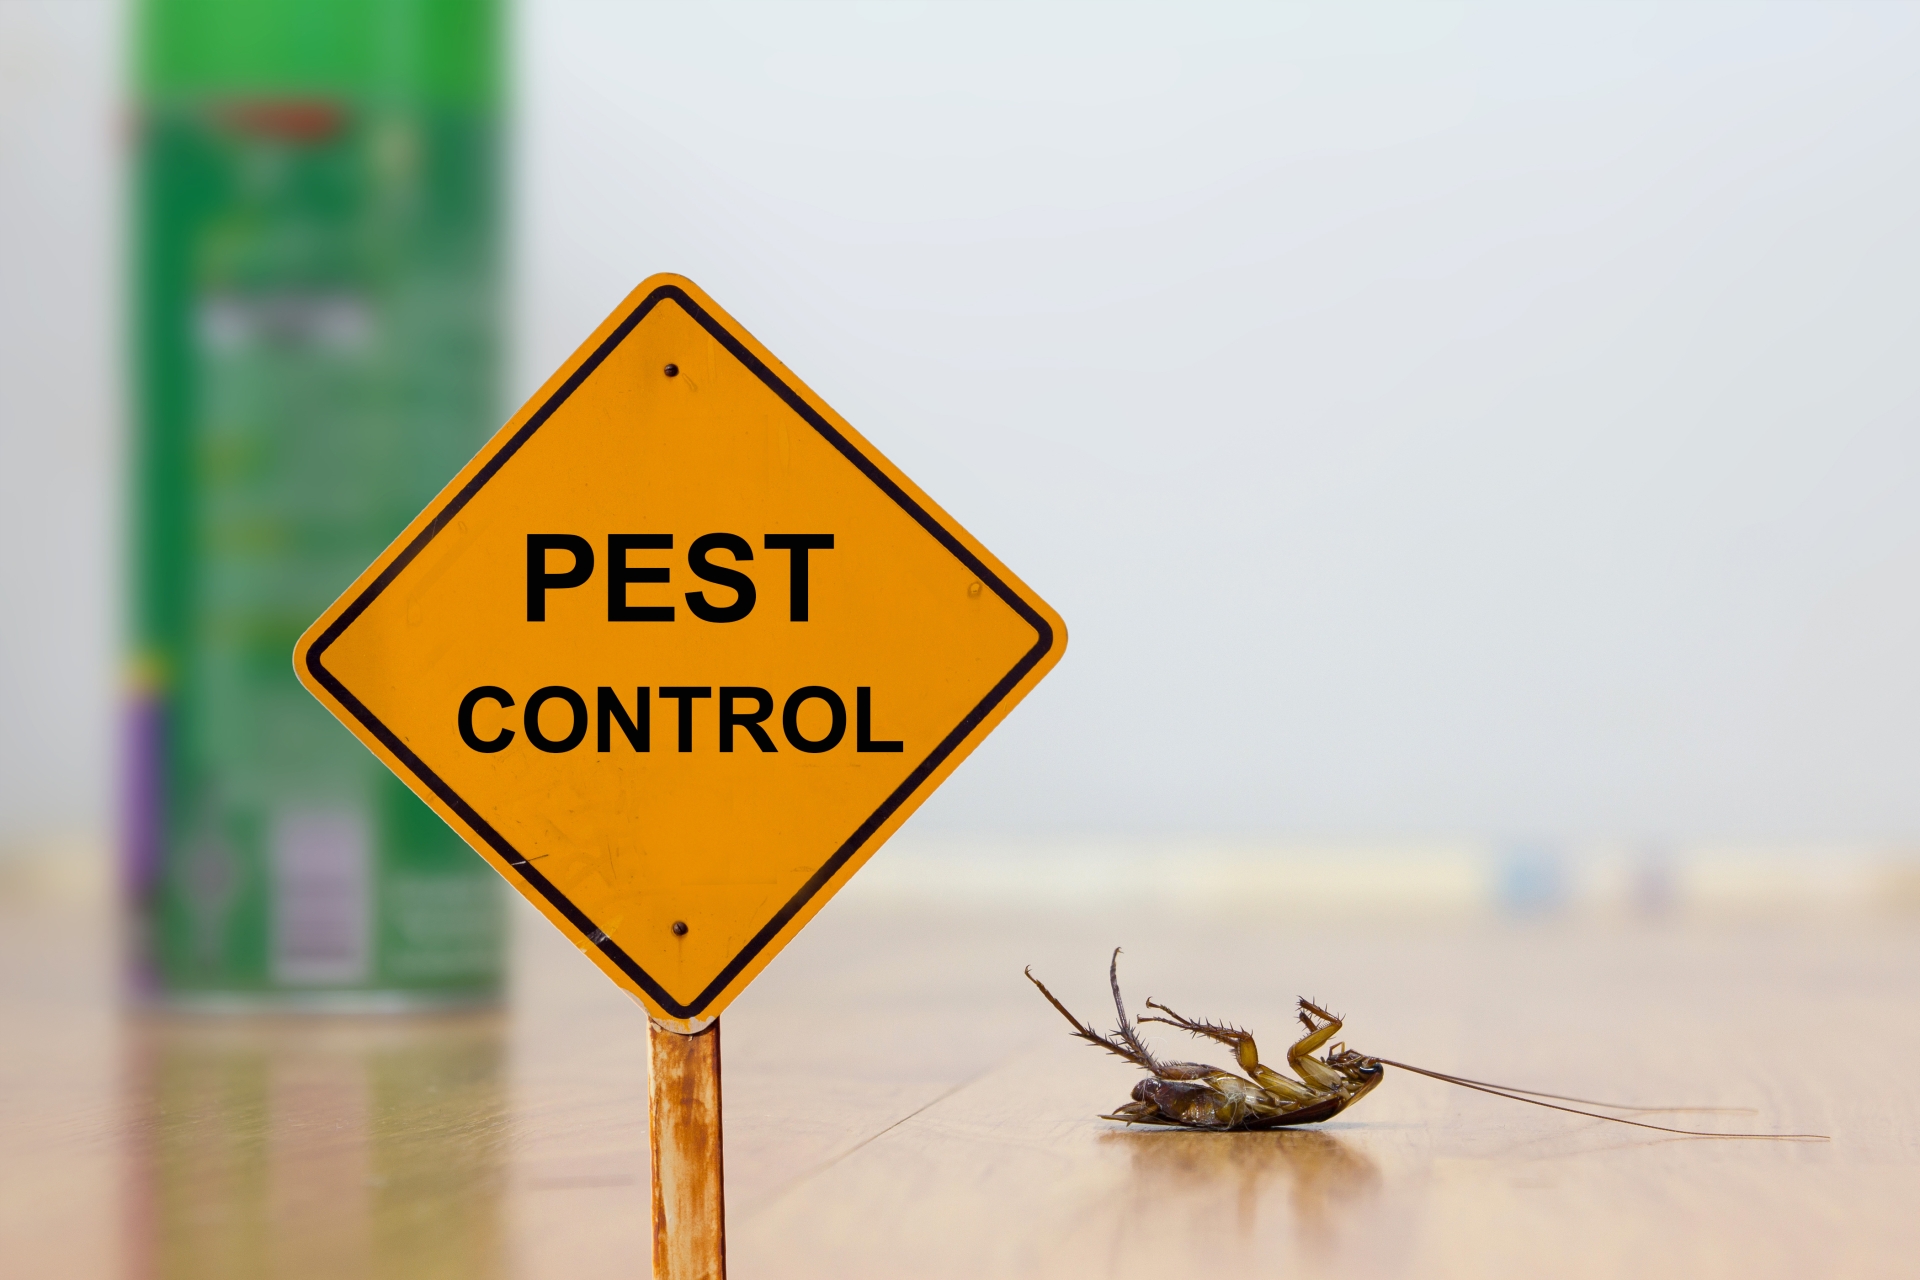 24 Hour Pest Control, Pest Control in Bexleyheath, Upton, DA6. Call Now 020 8166 9746